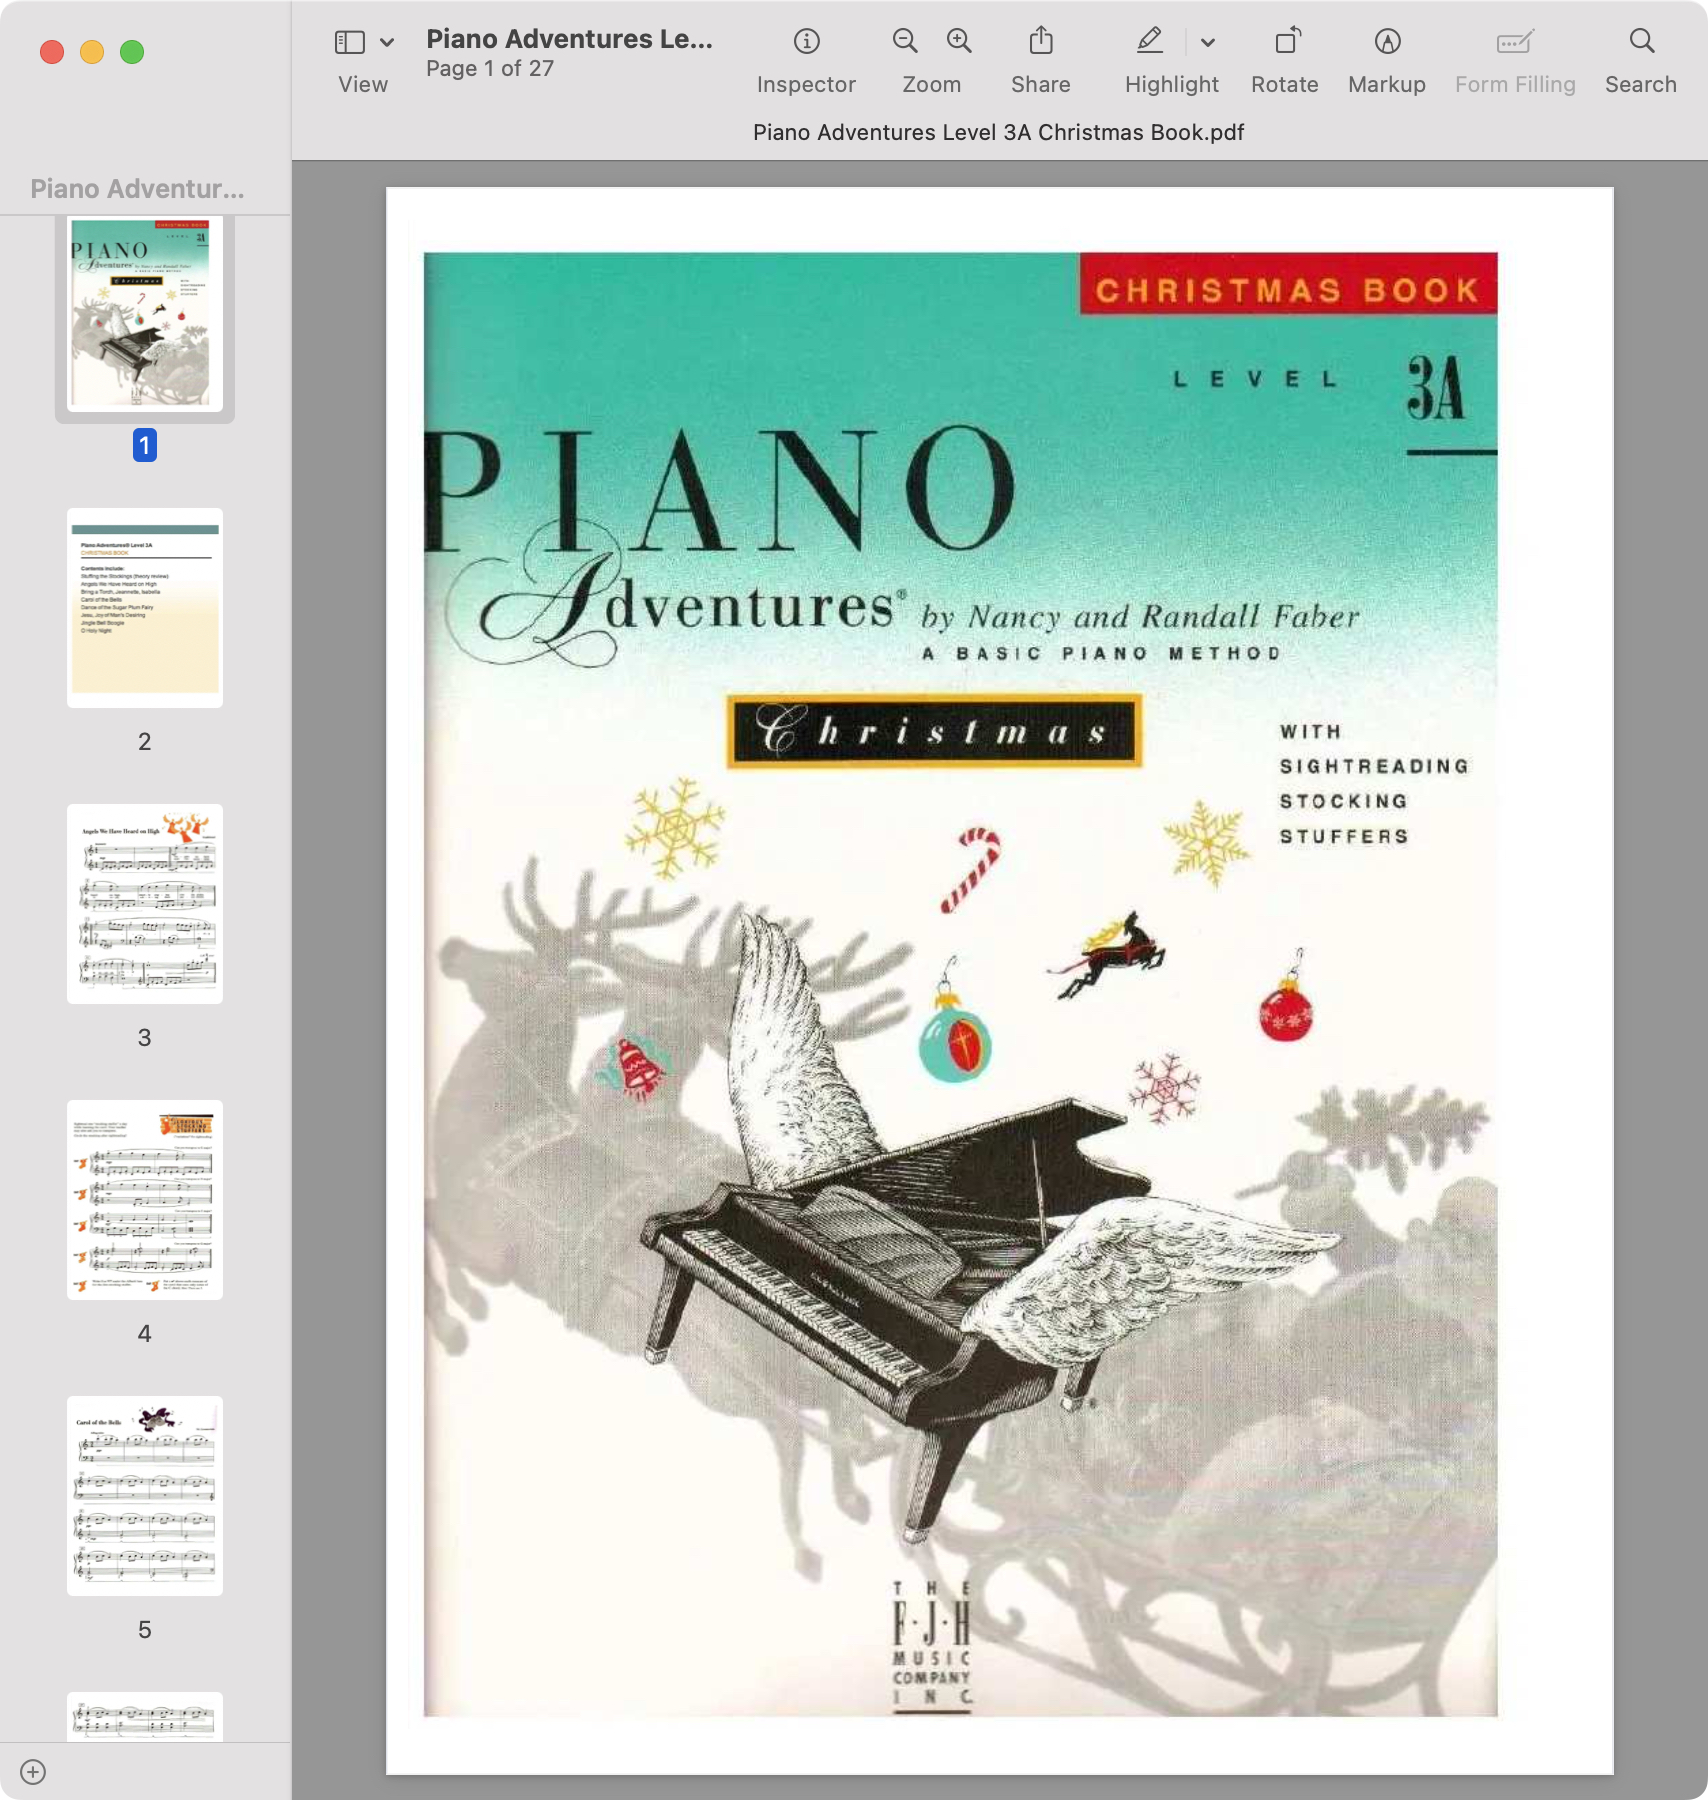 Piano Adventures Level 3A Christmas Book.jpg